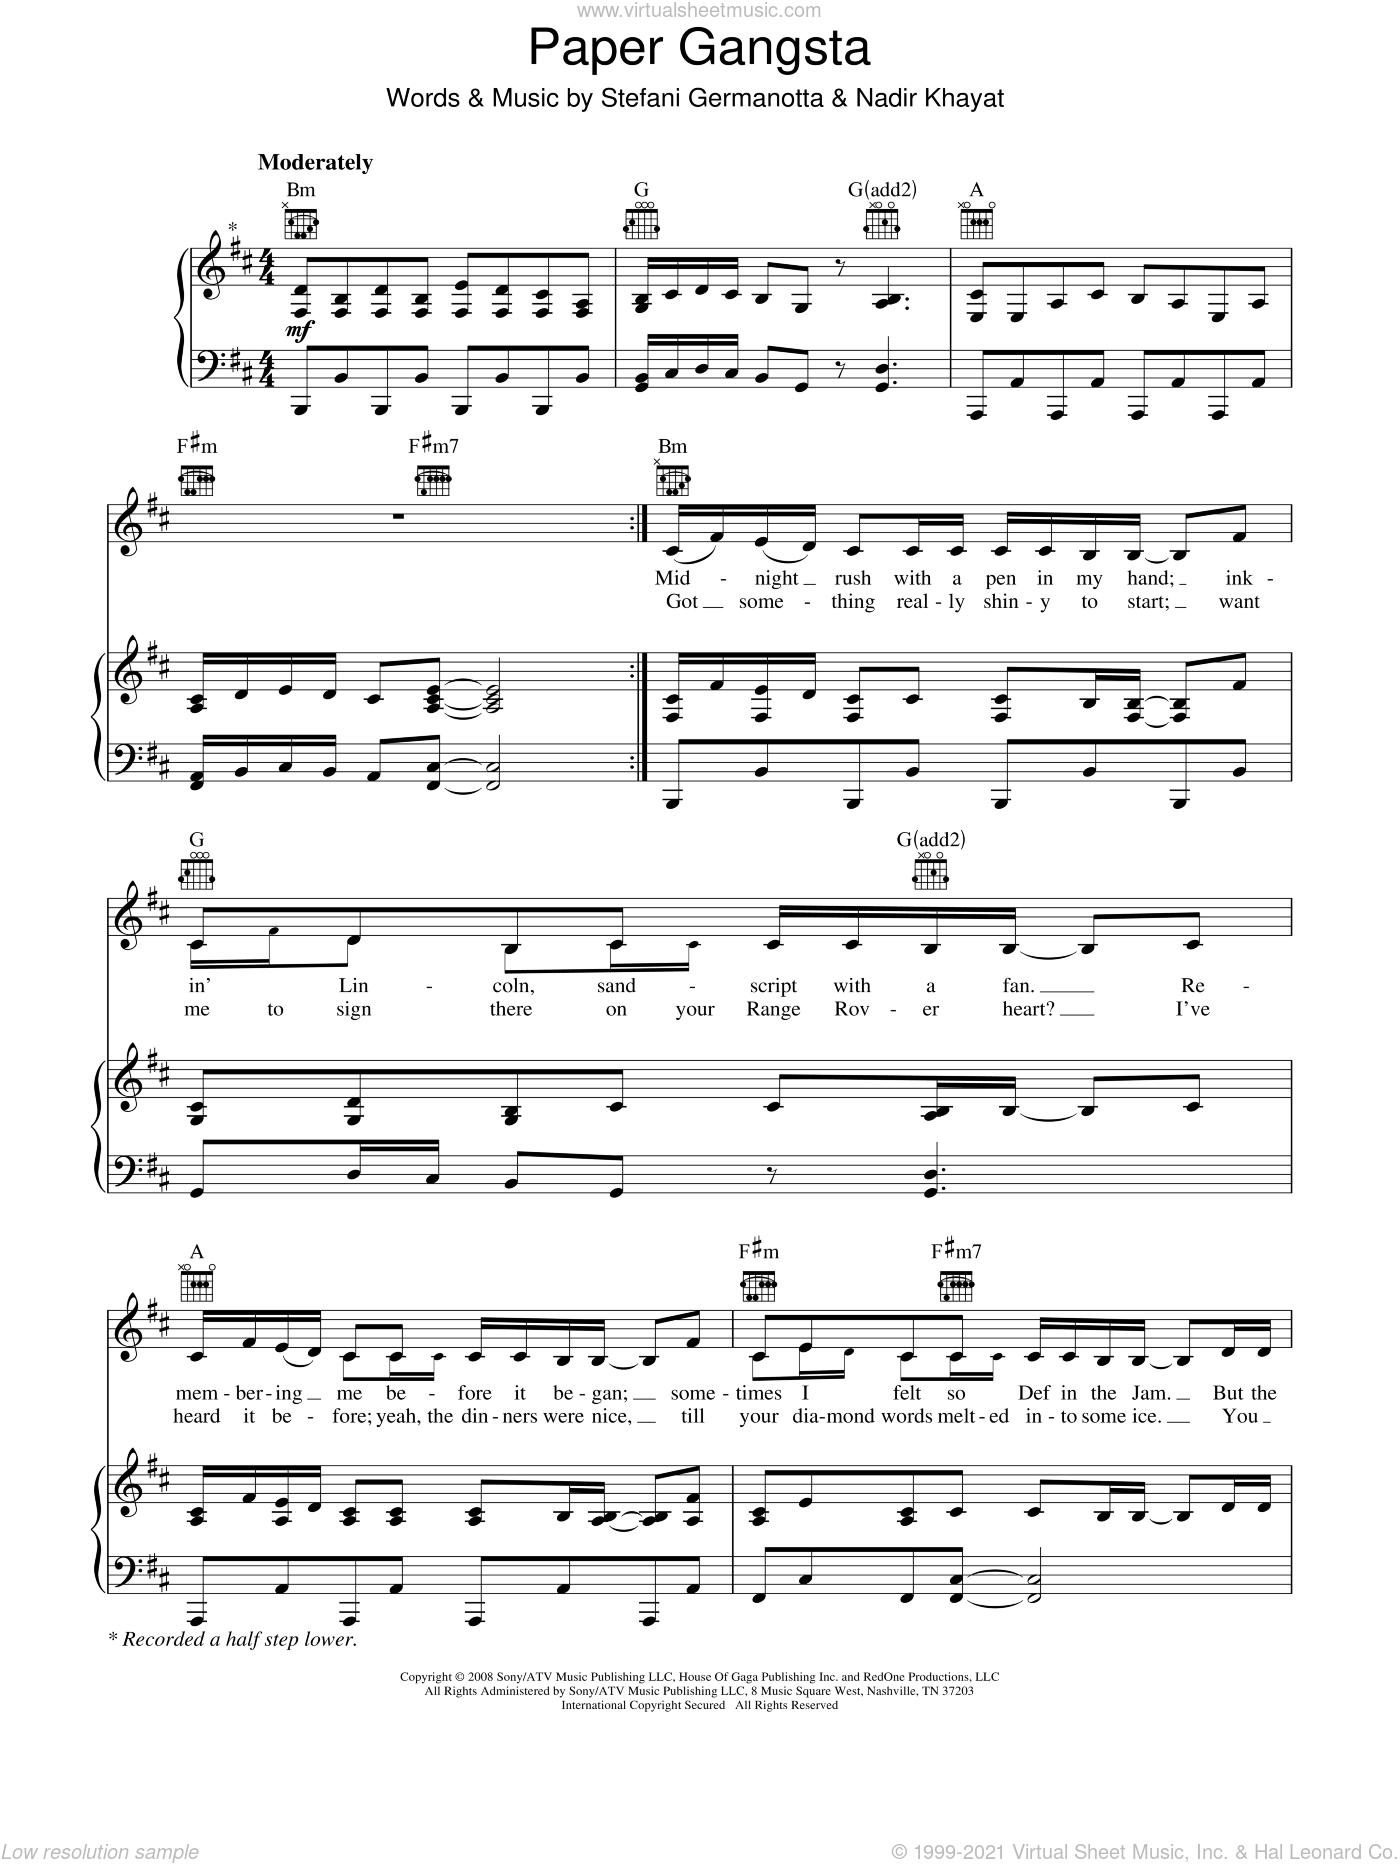 GaGa - Paper Gangsta Sheet Music For Voice, Piano Or Guitar V2